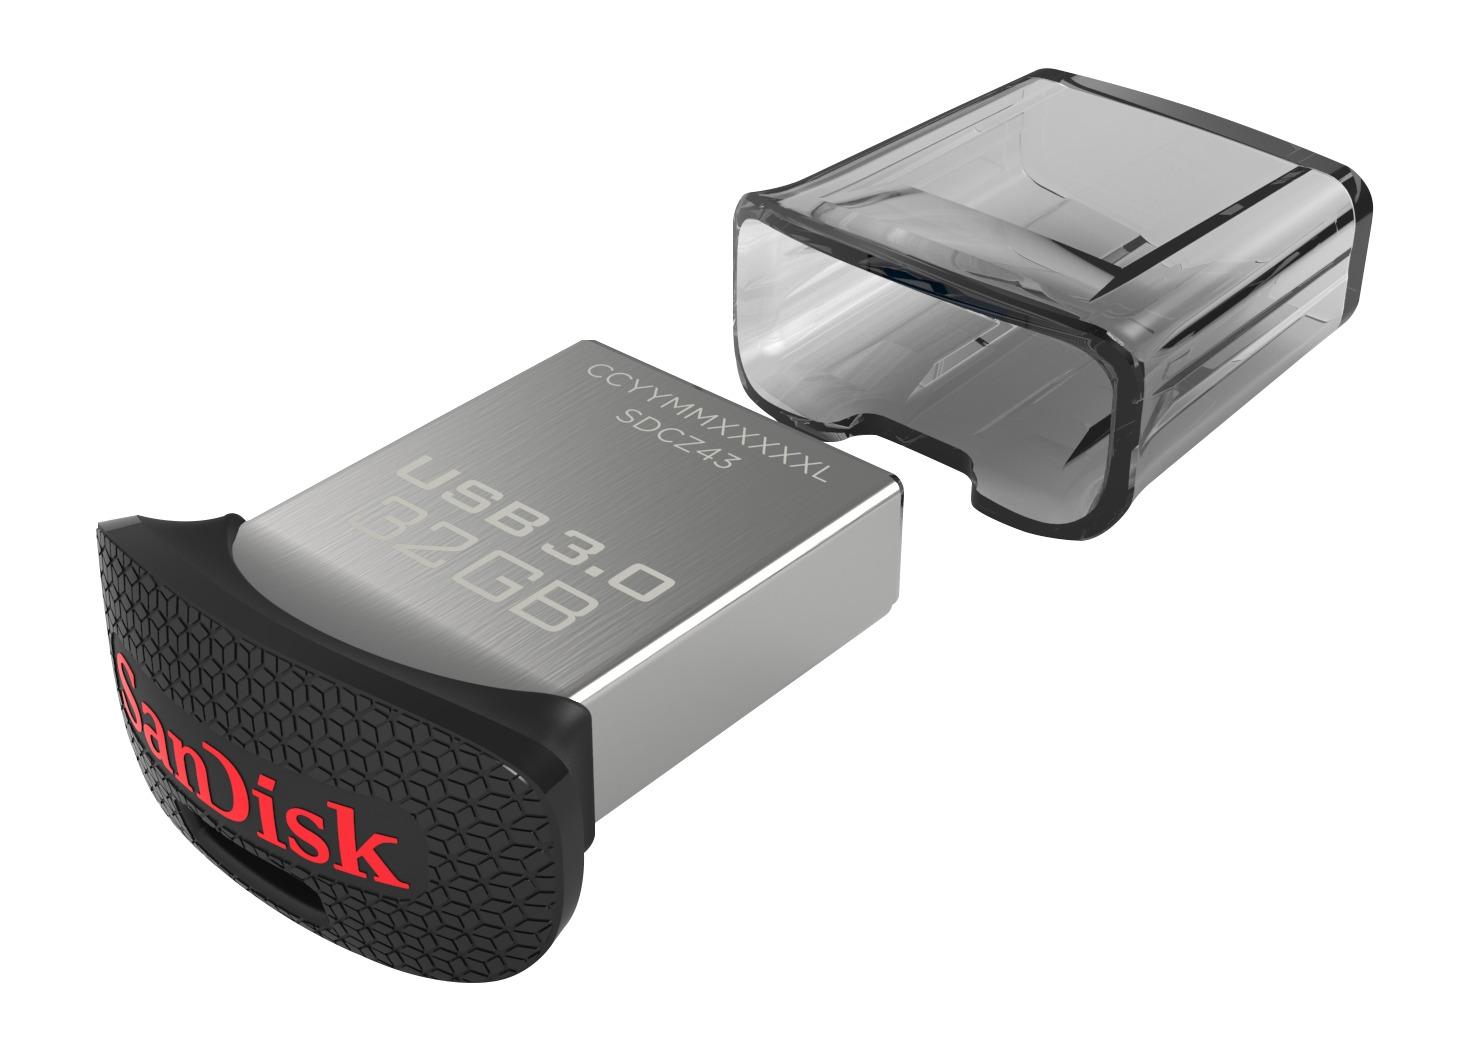 Memoria USB SanDisk Ultra Shift 32GB USB 3.0